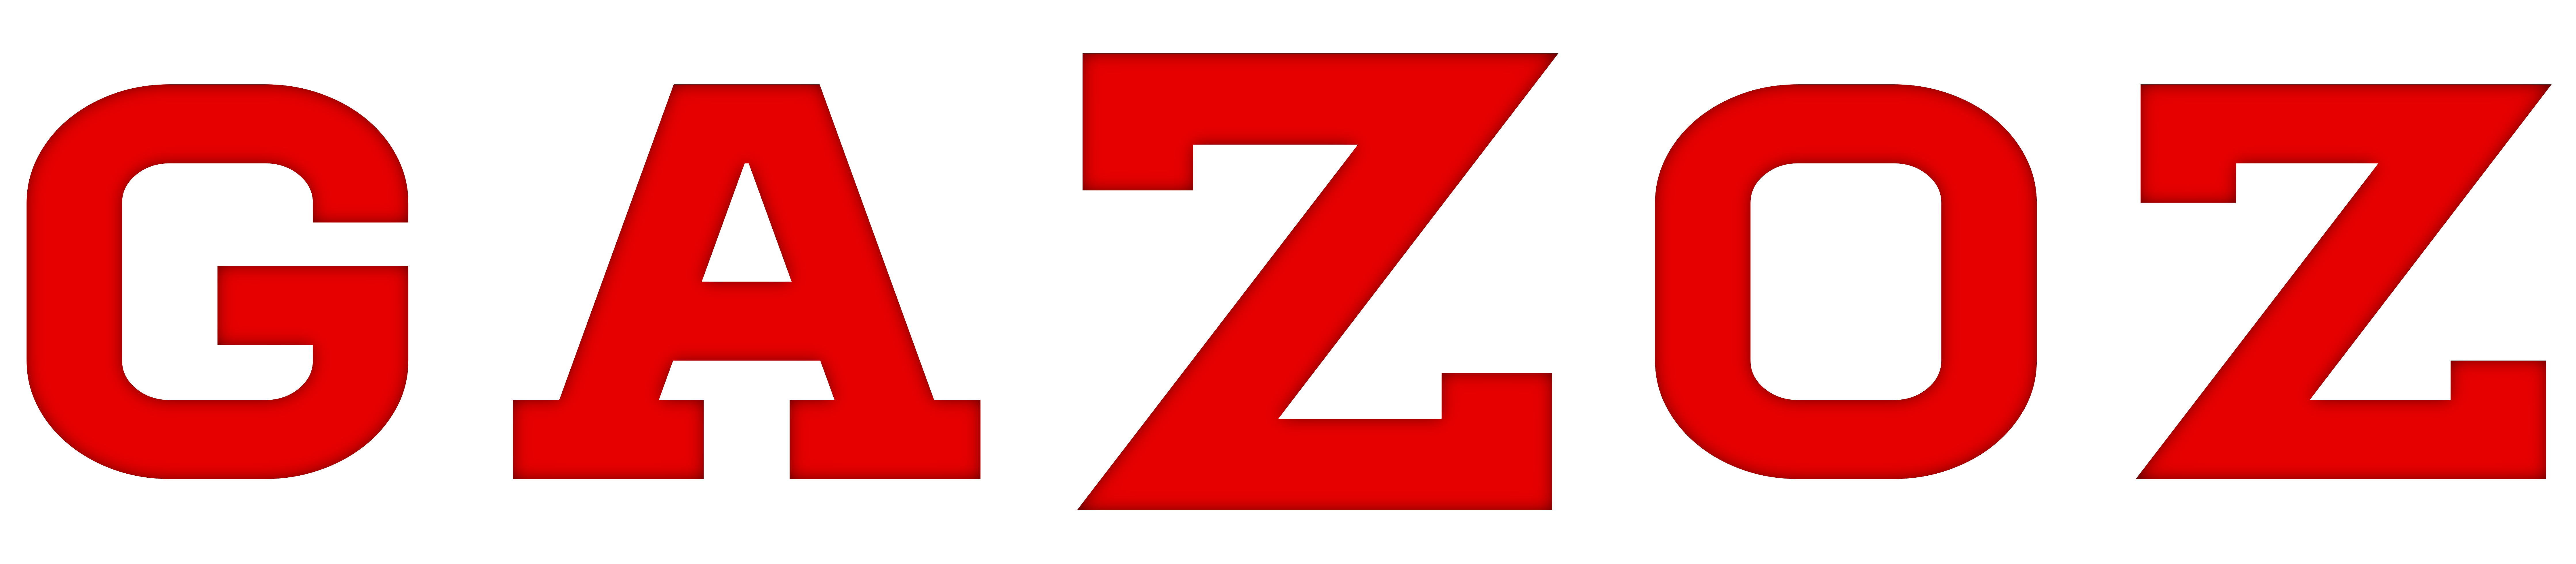 gaZoz logo white-red